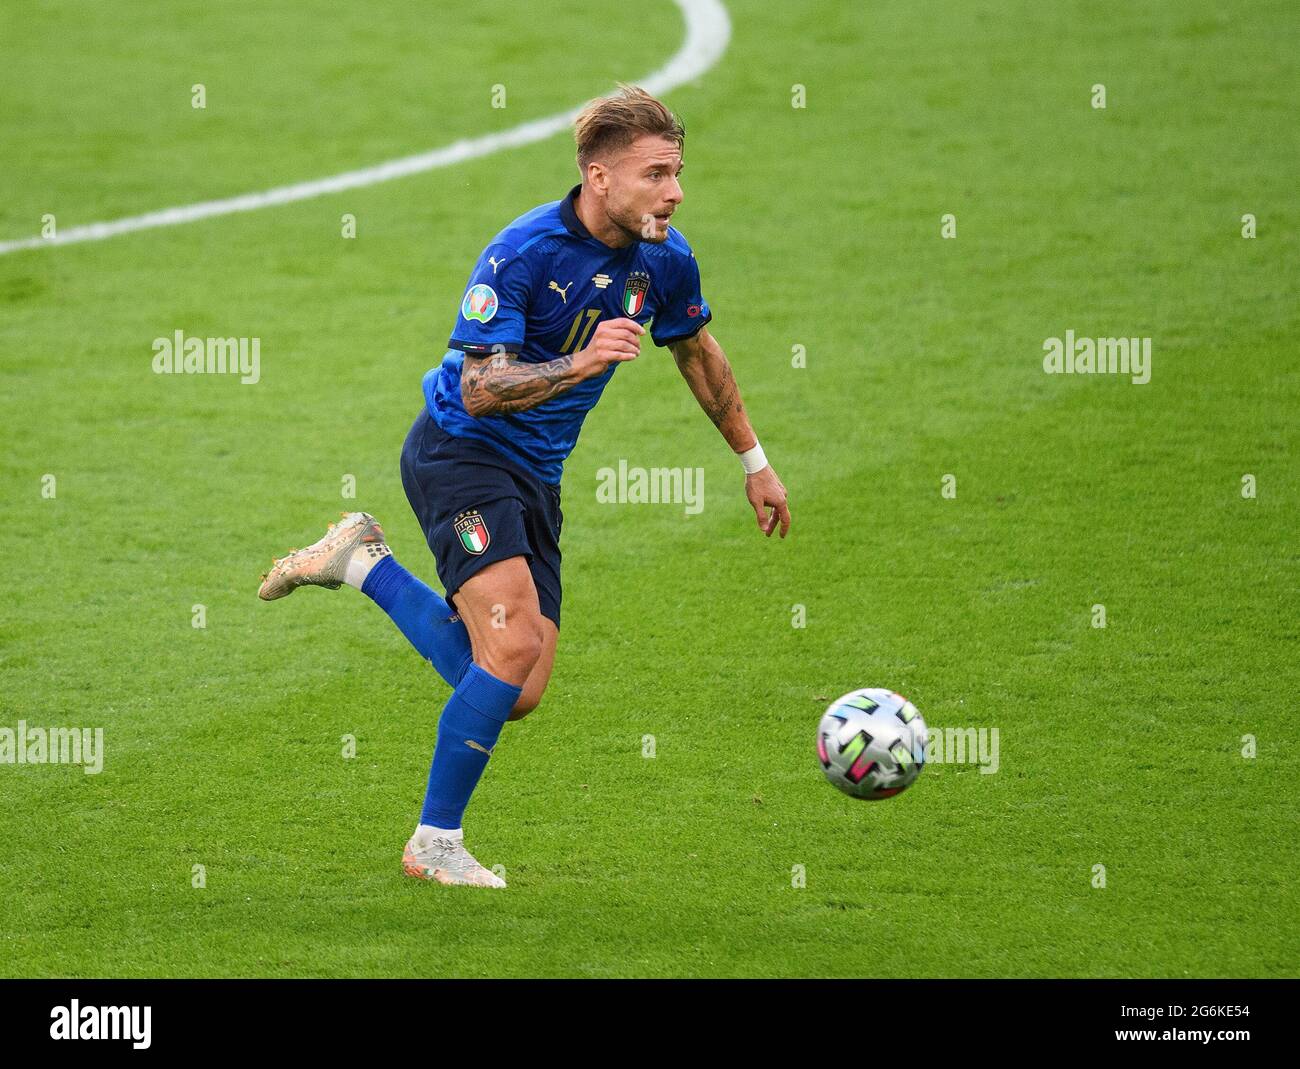 07 Julio 2021 - Italia contra España - UEFA EURO 2020 Semi-Final - Wembley  - Londres Ciro Immobile Picture Credit : © Mark Pain / Alamy Live News  Fotografía de stock - Alamy